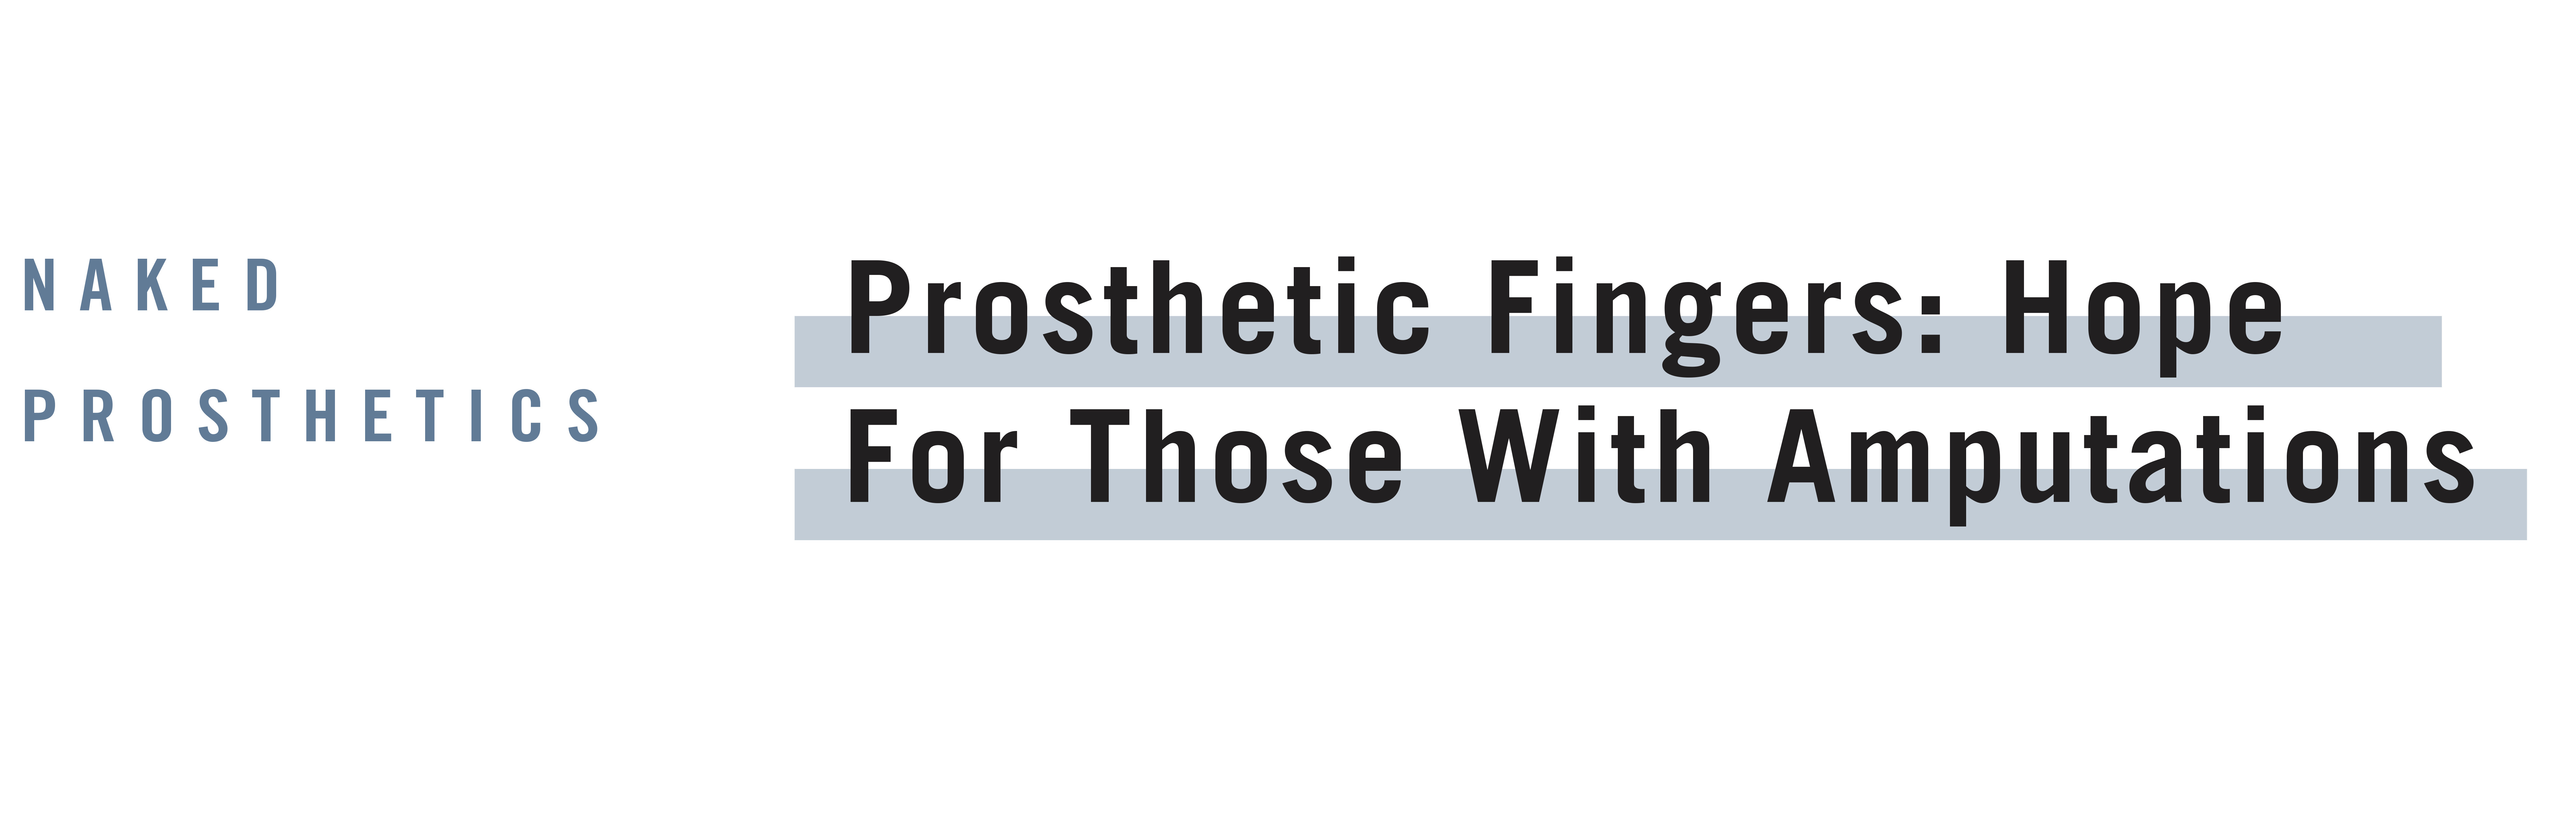 Prosthetic Fingers by Naked Prosthetics